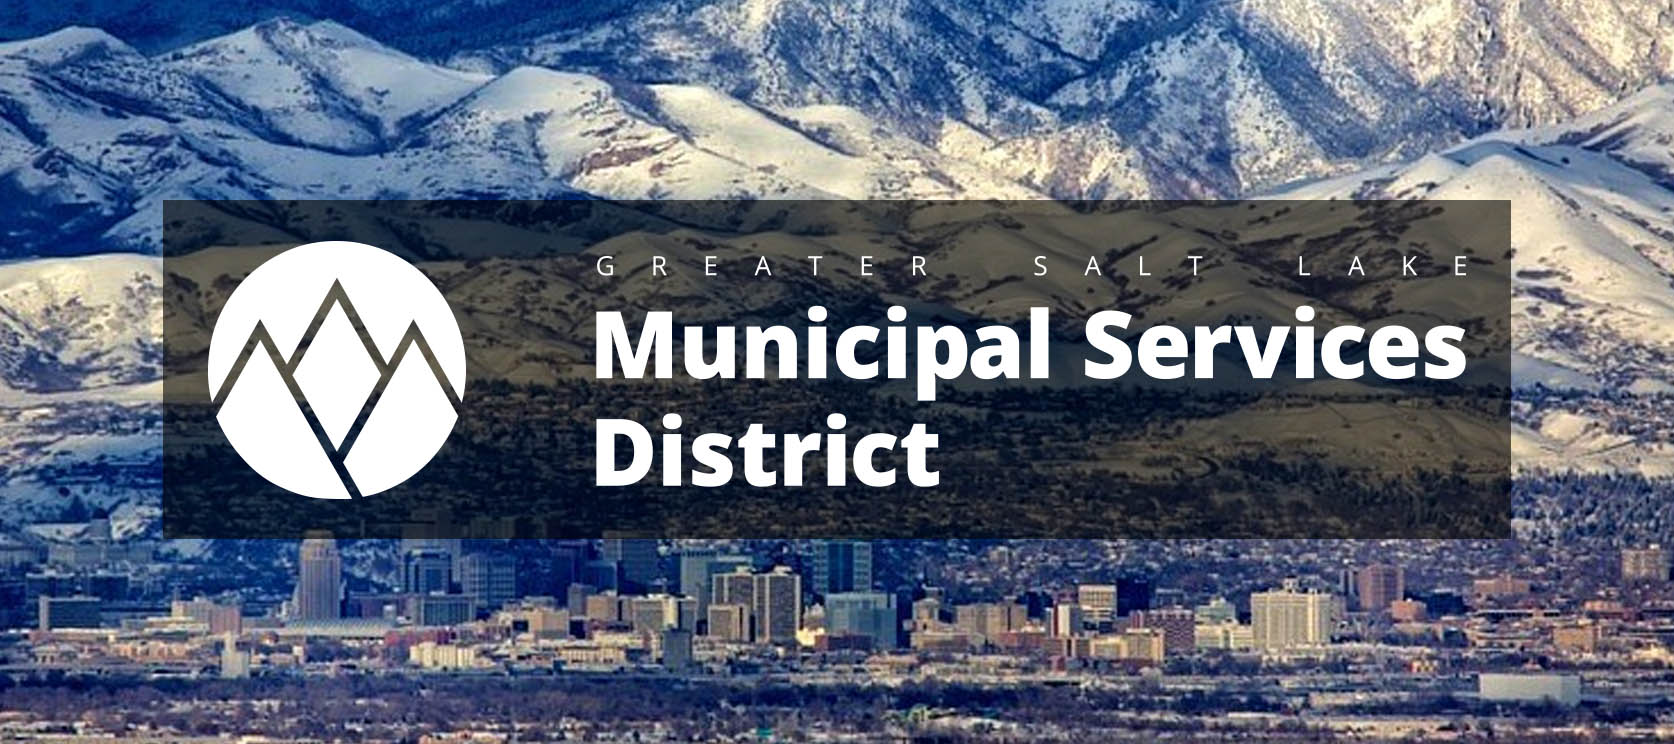 greater salt lake municipal services district